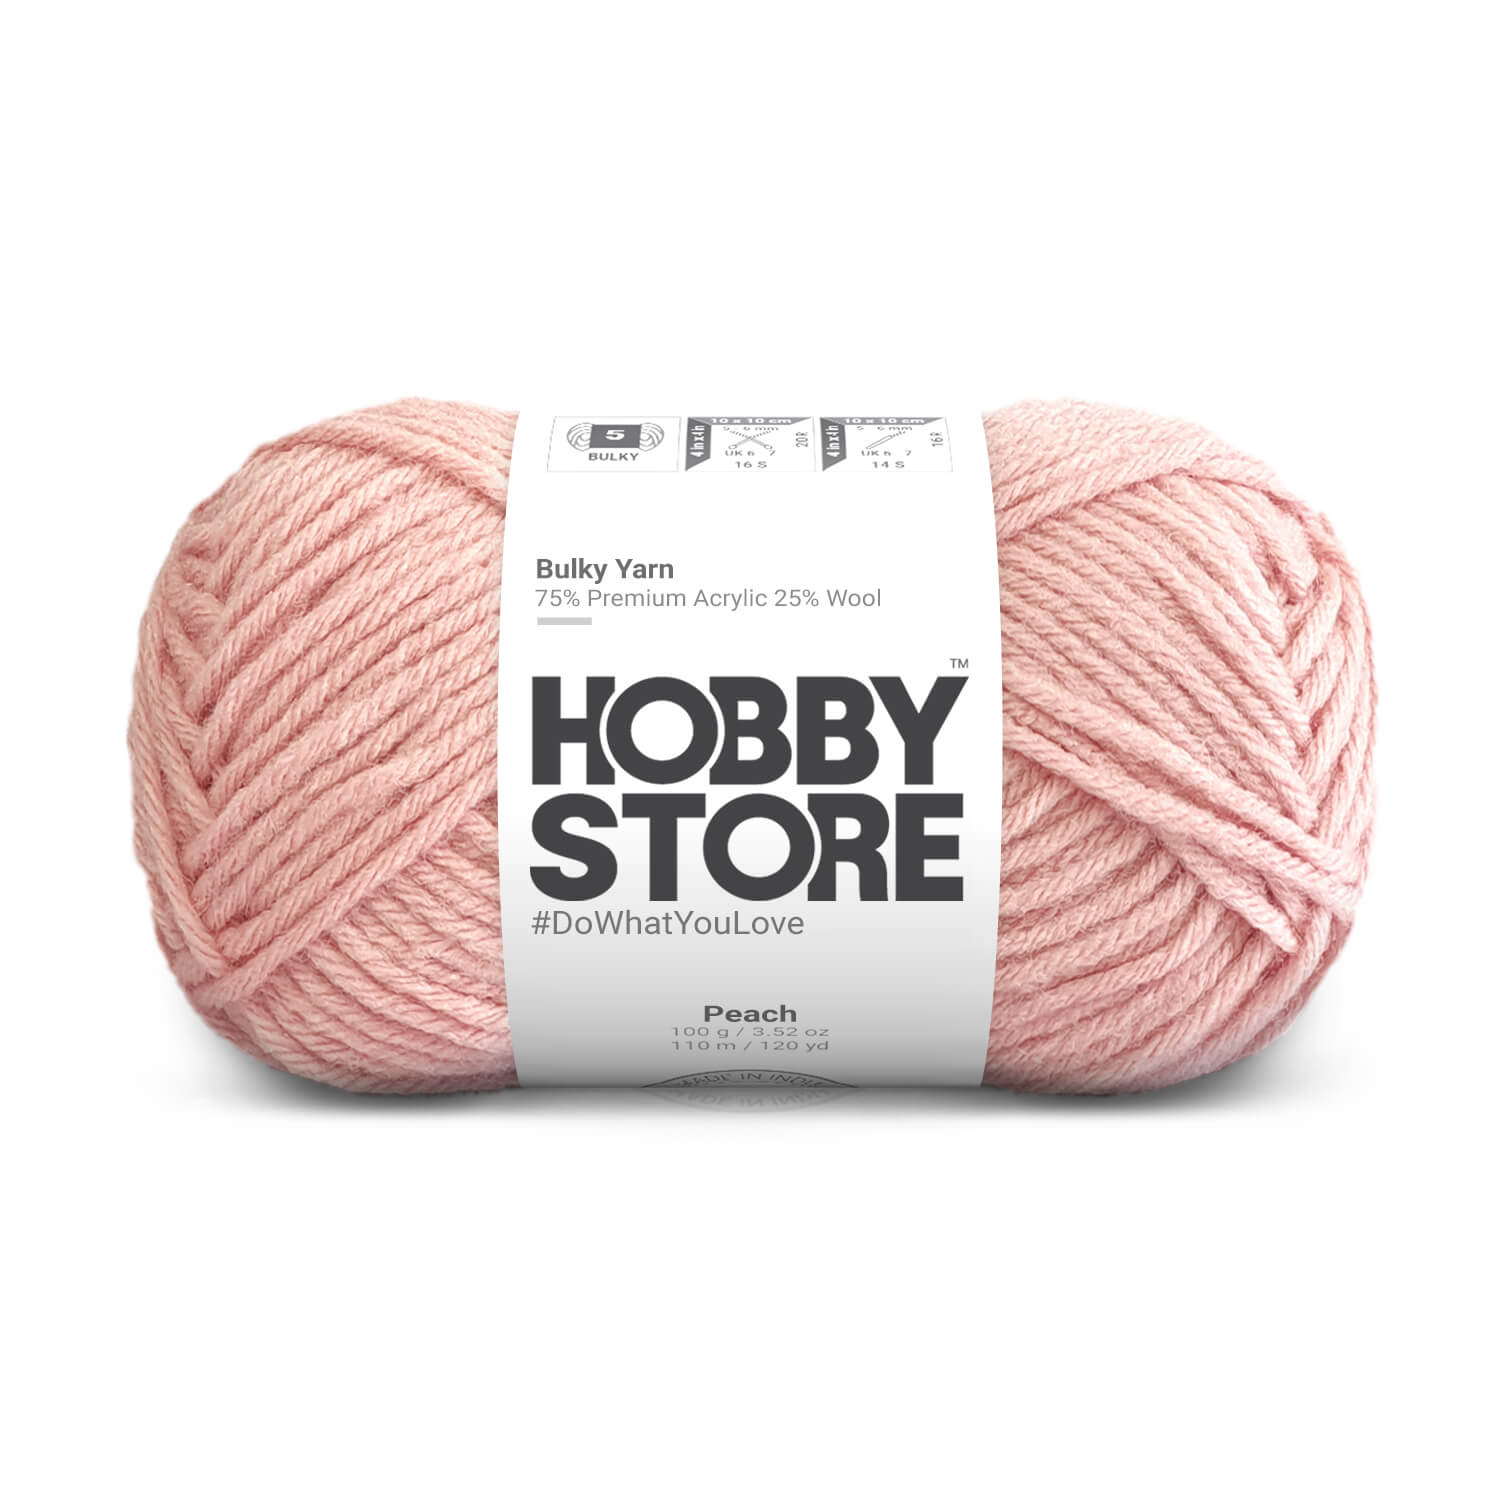 Bulky Yarn by Hobby Store - Peach 6022